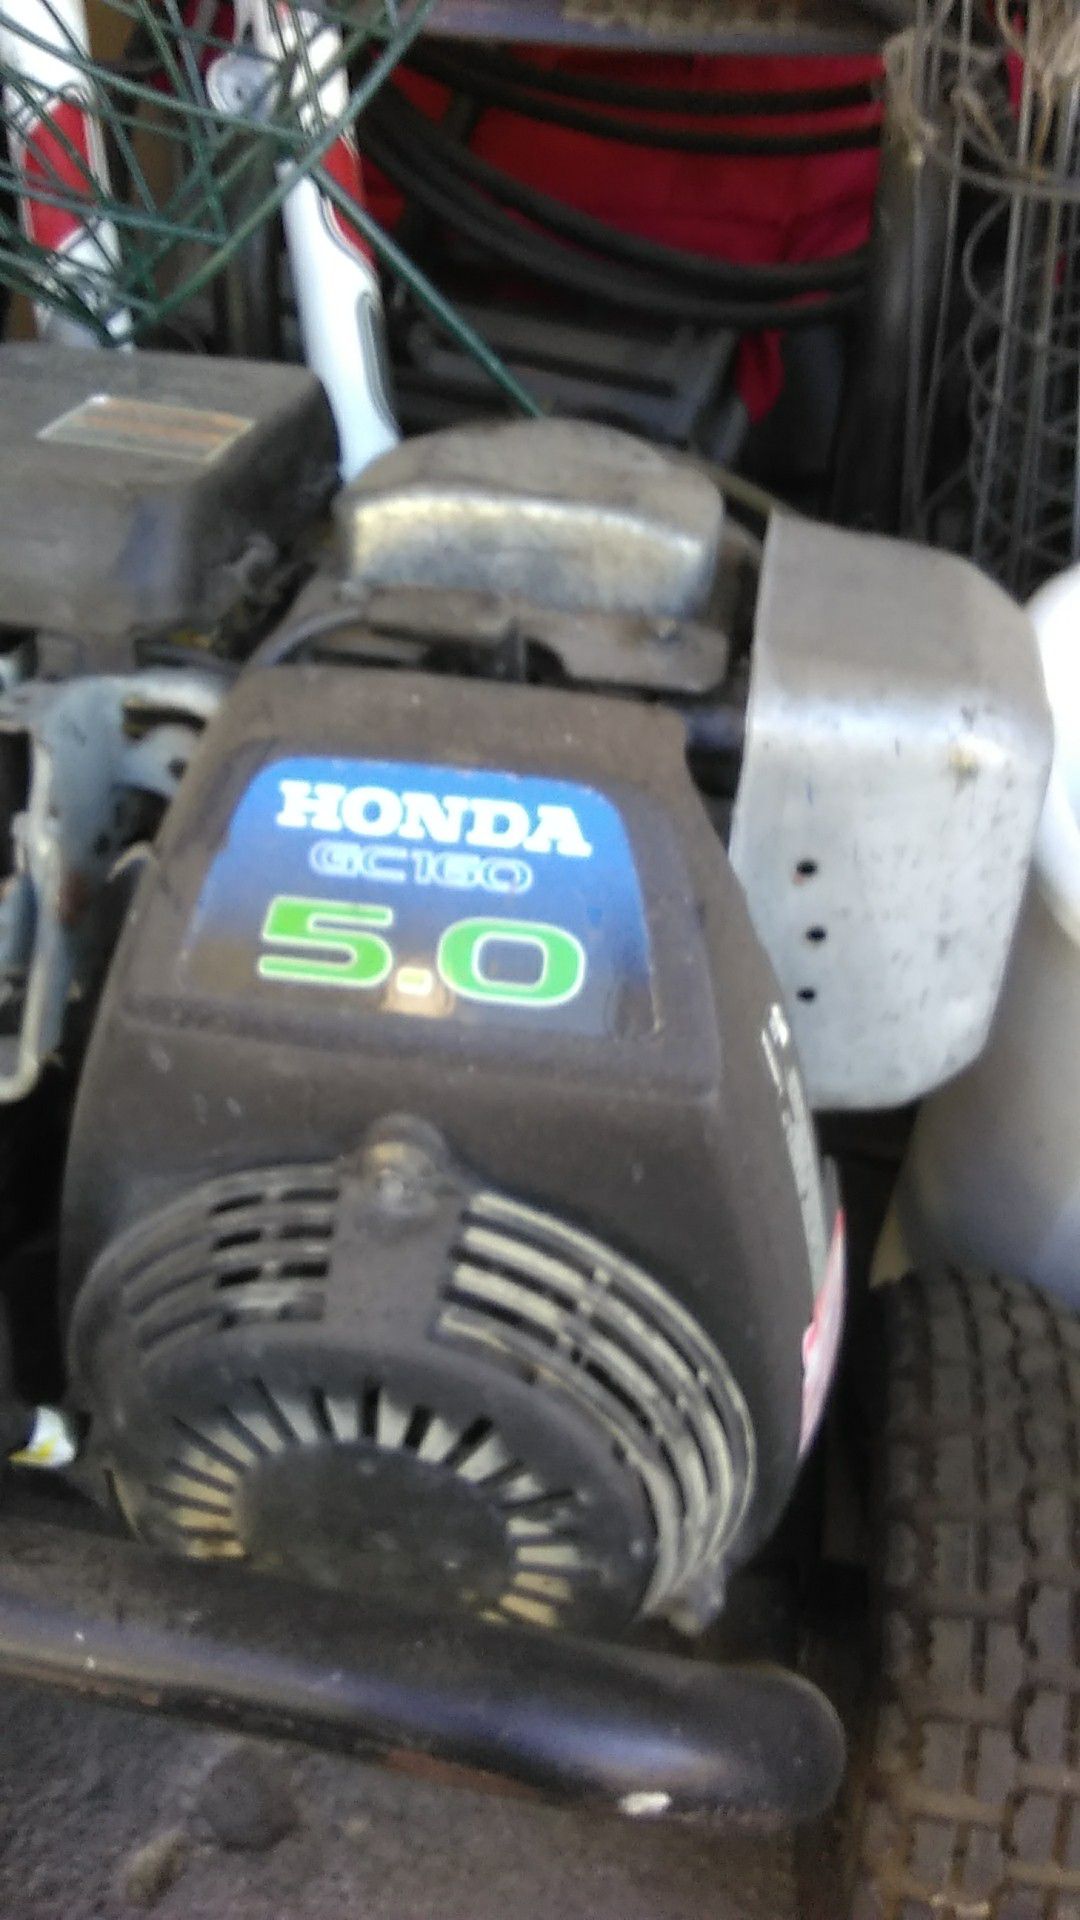 Honda GC160 5.0 motor